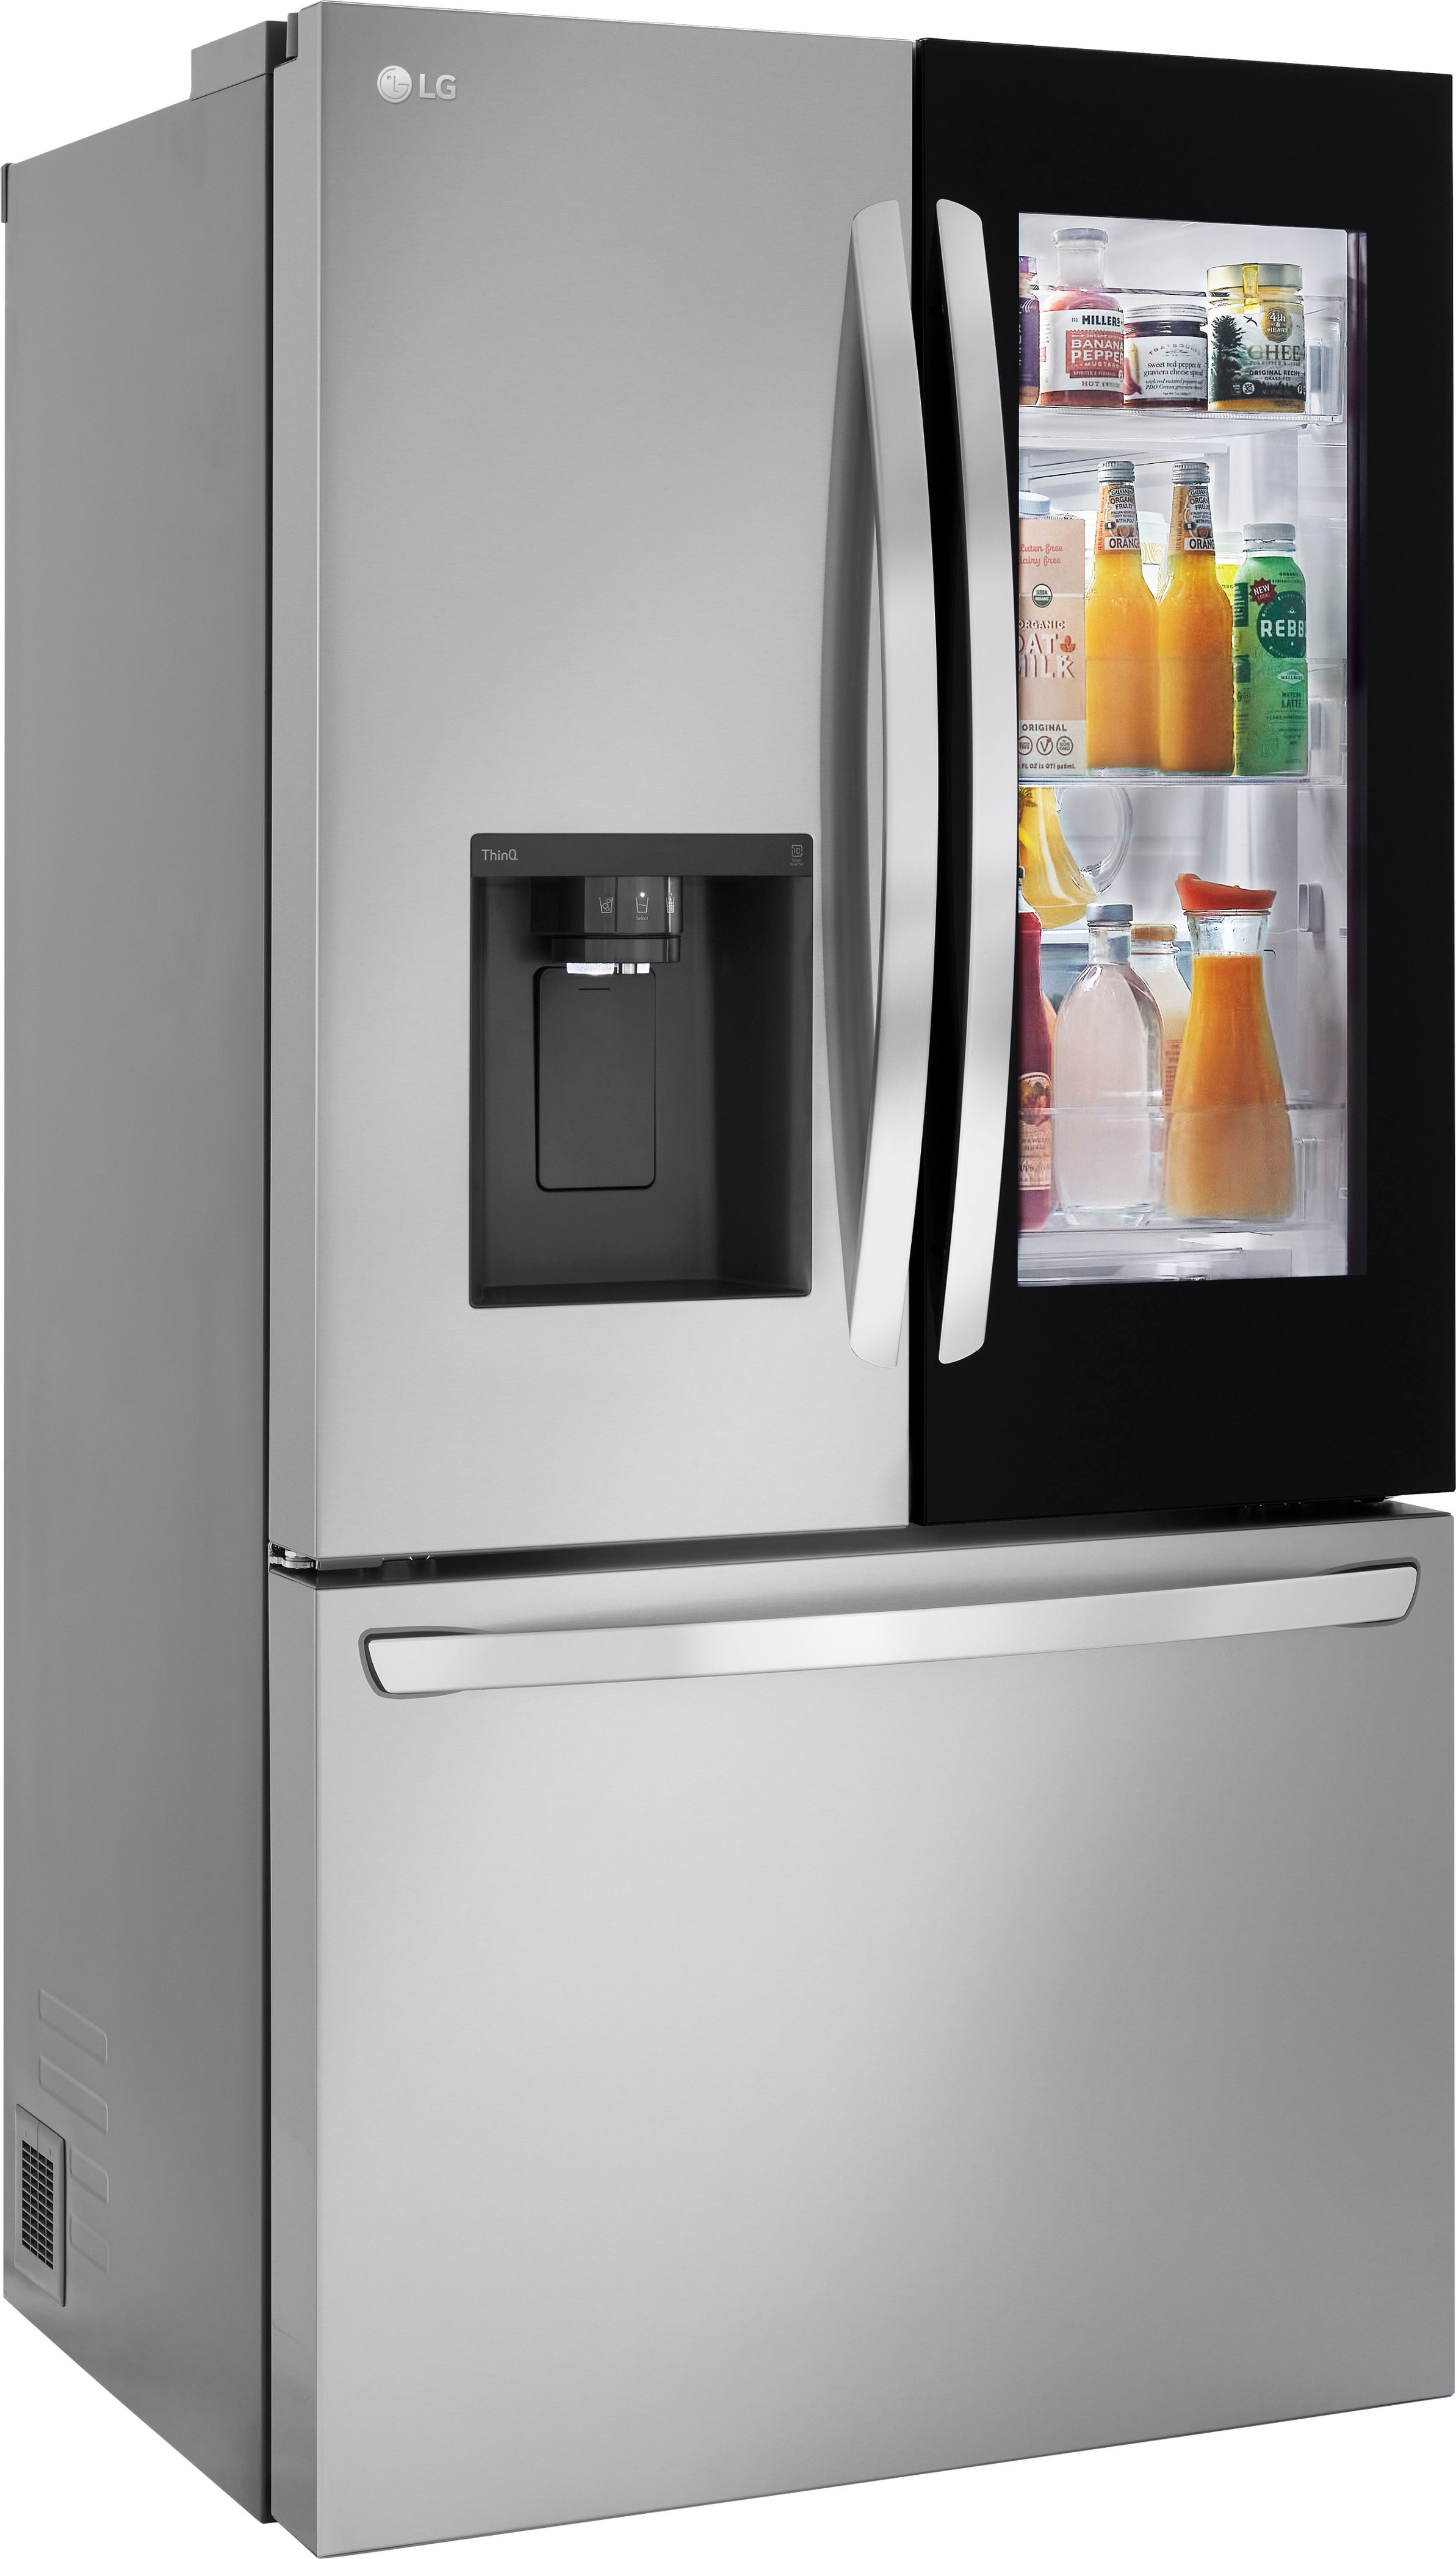 LG 25.5 Cu. Ft. French Door Counter-Depth Smart Refrigerator with InstaView  Stainless Steel LRFOC2606S - Best Buy